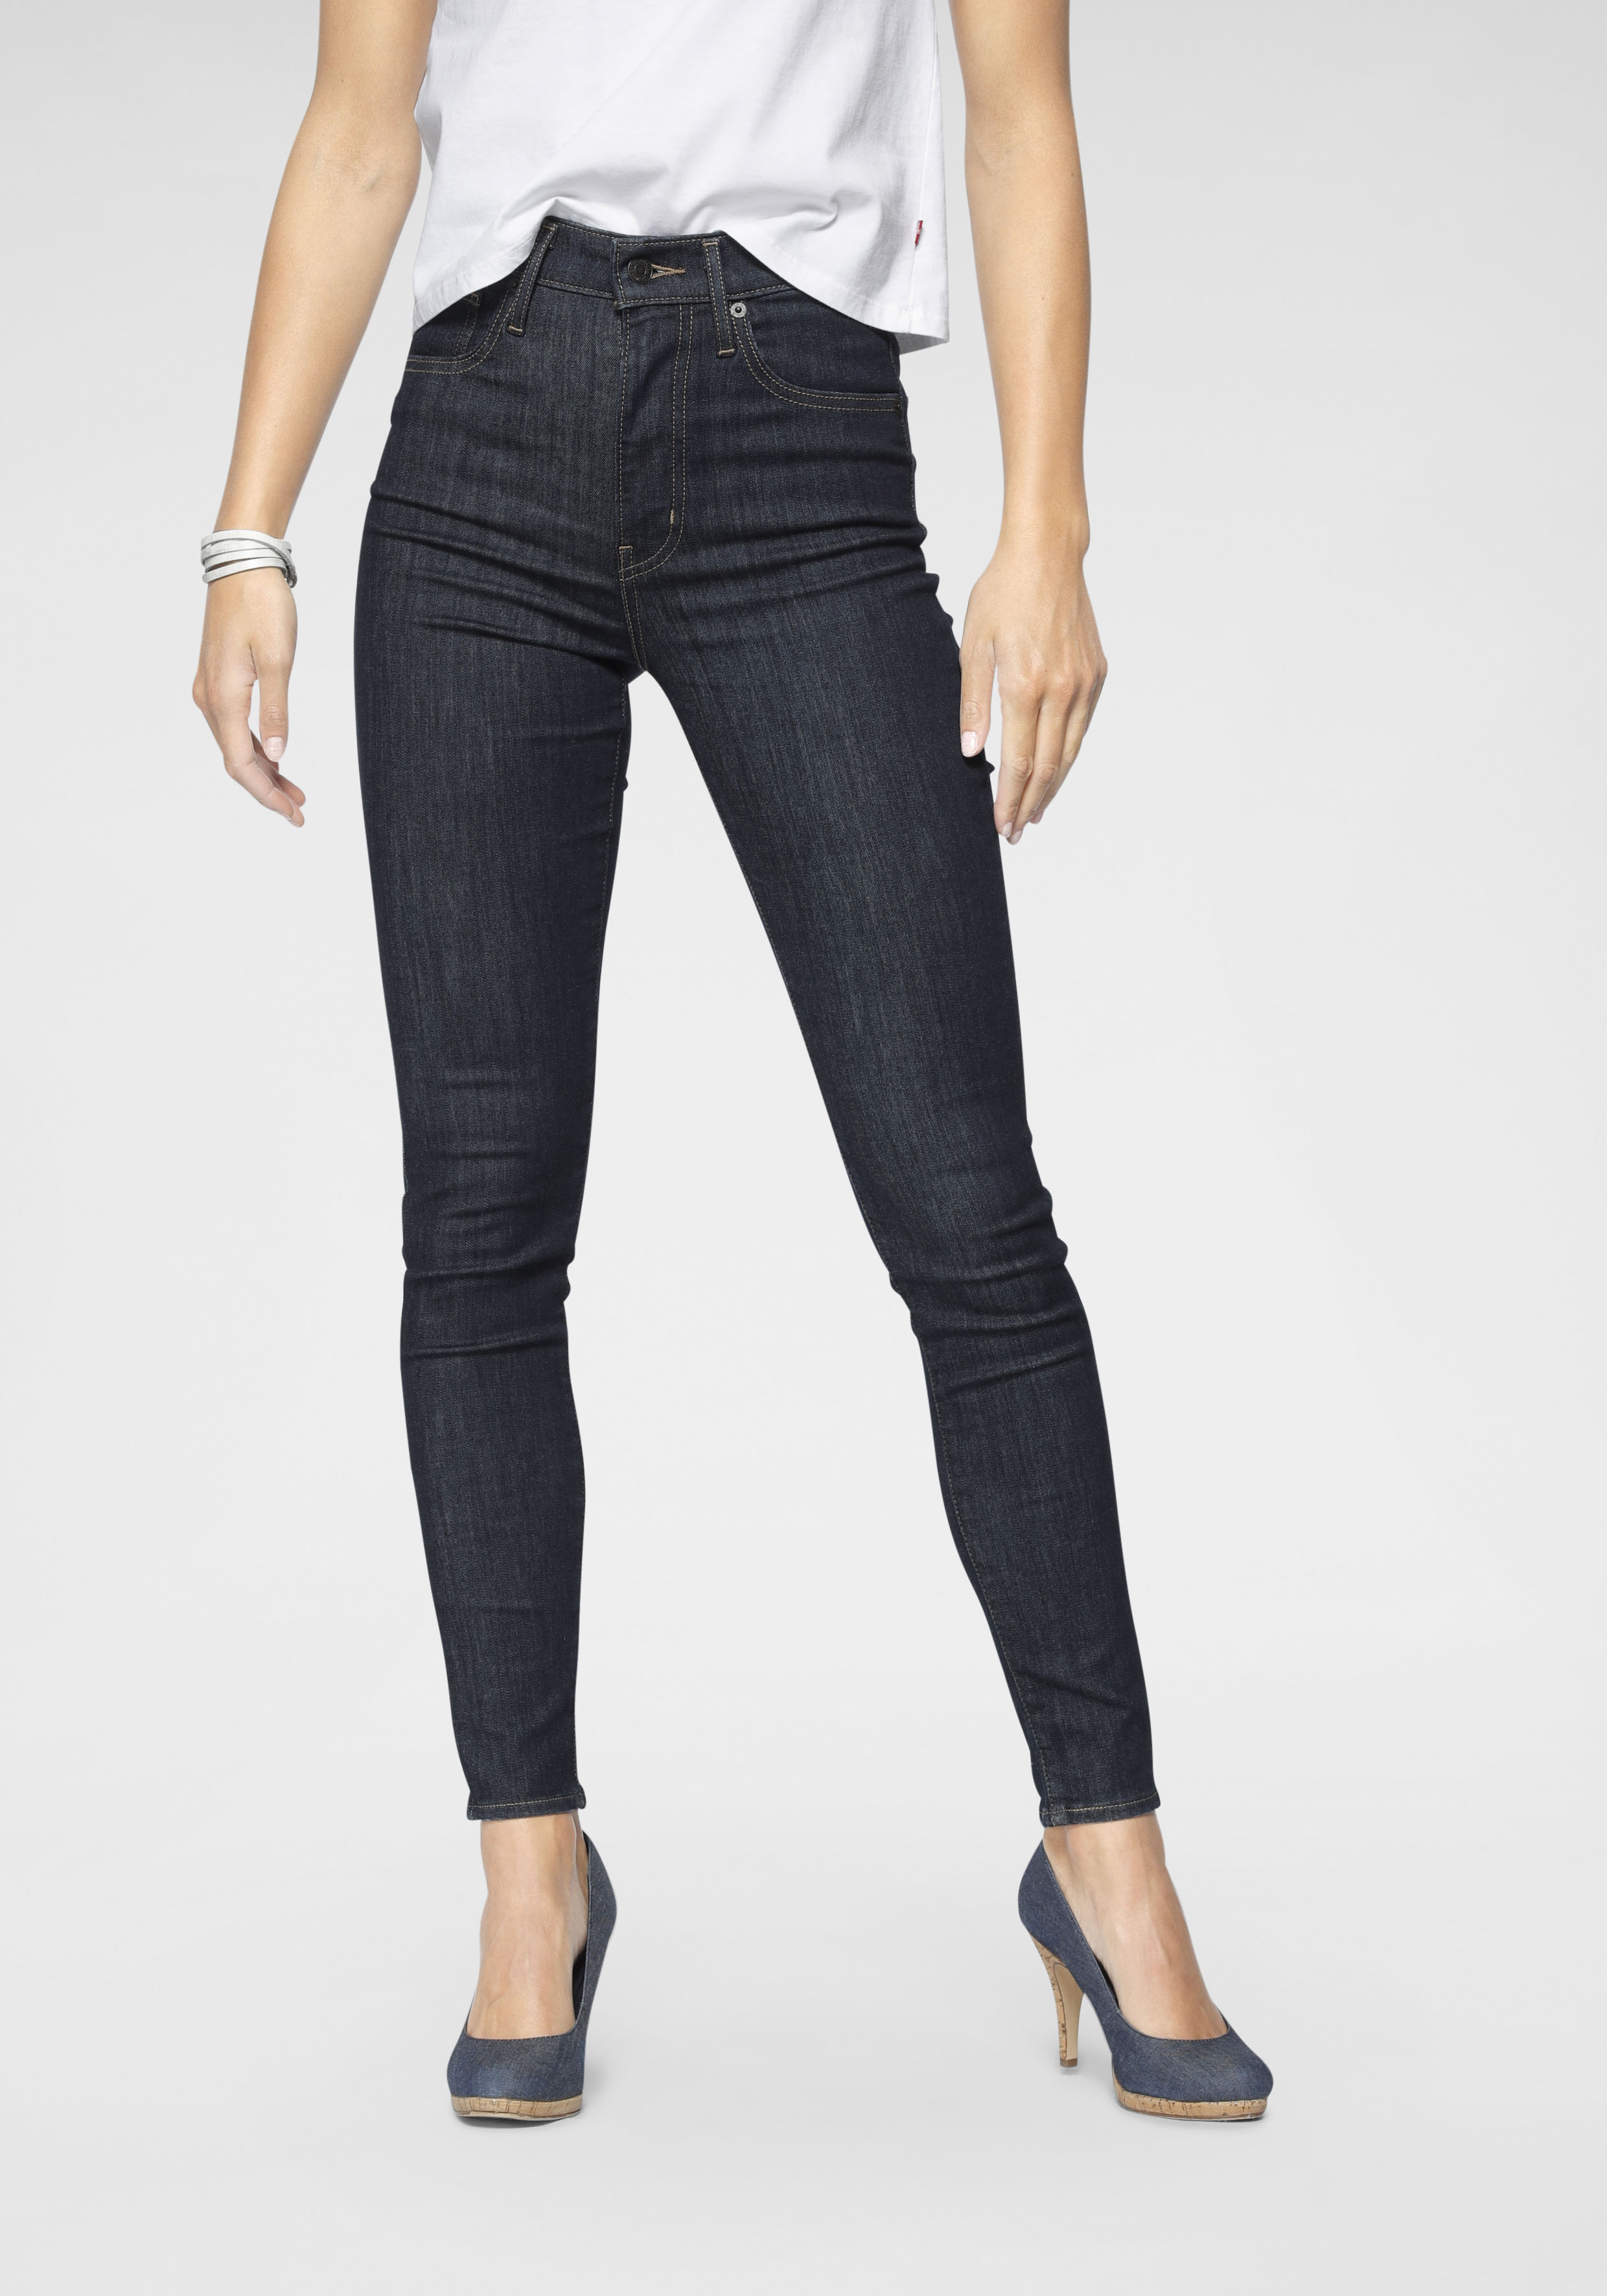 Levi's Damen Mile High Super Skinny Jeans, Schwarz (Black Galaxy 0052), W28/L32